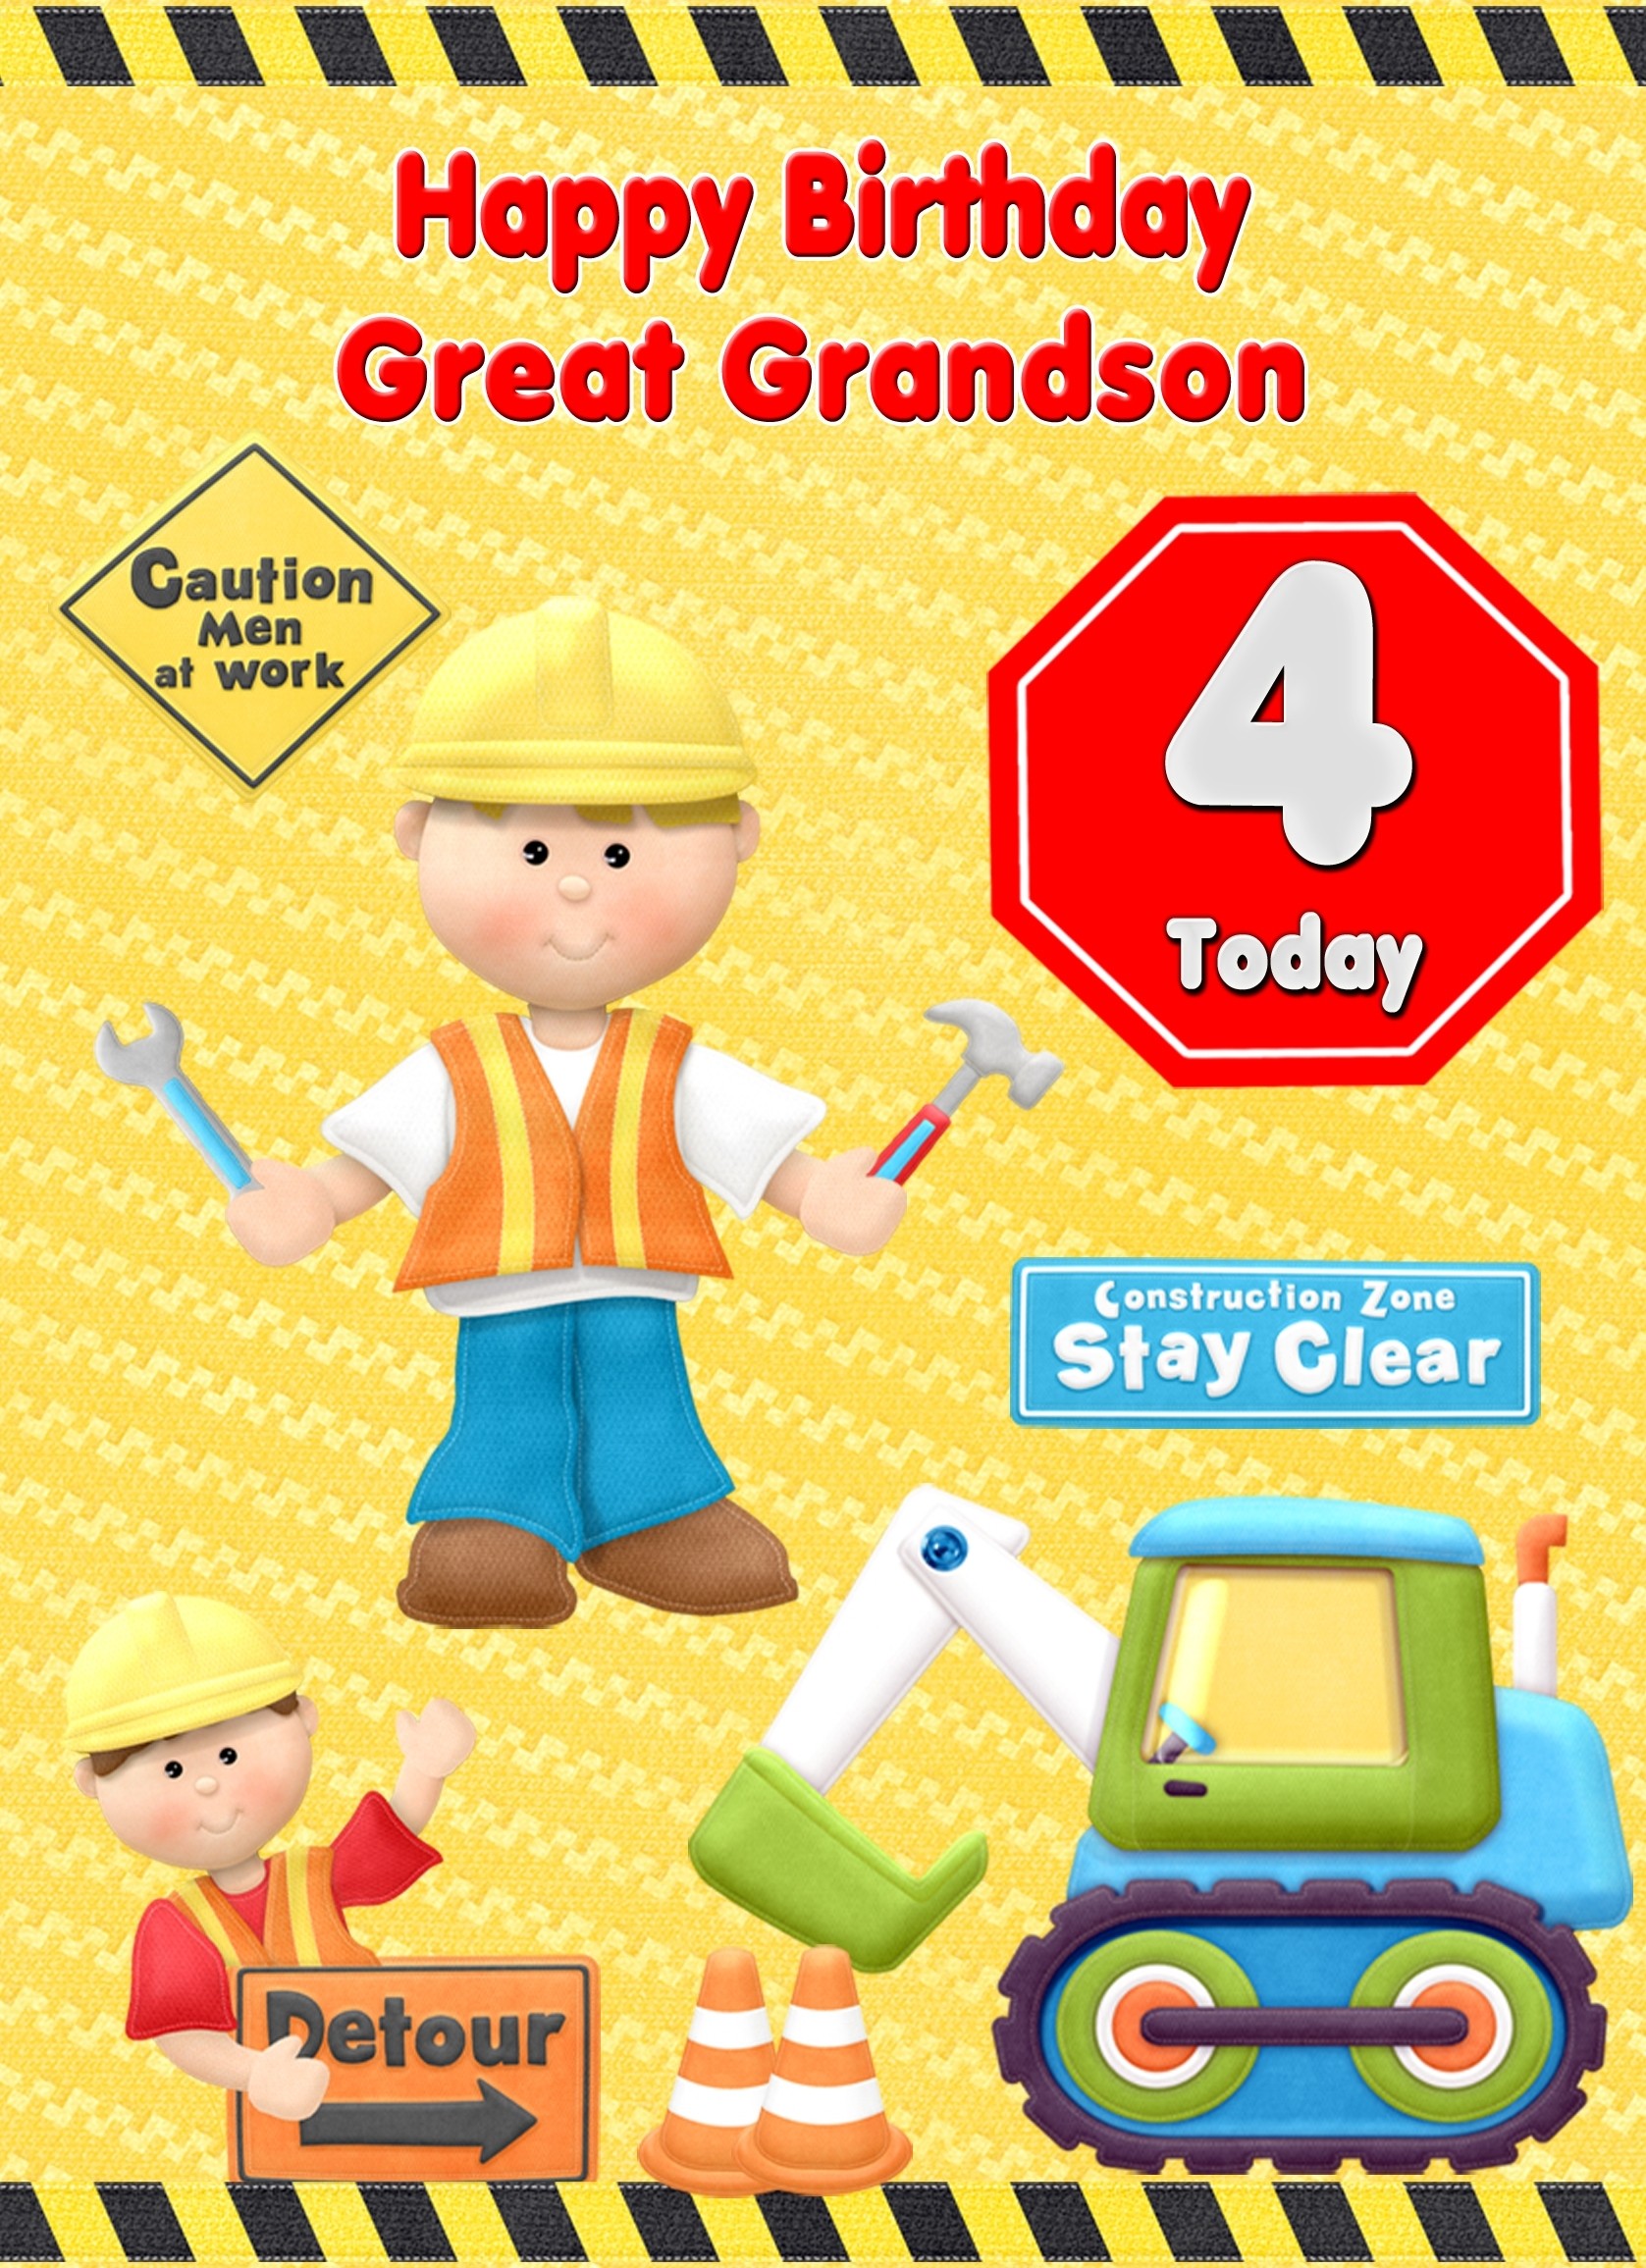 Kids 4th Birthday Builder Cartoon Card for Great Grandson